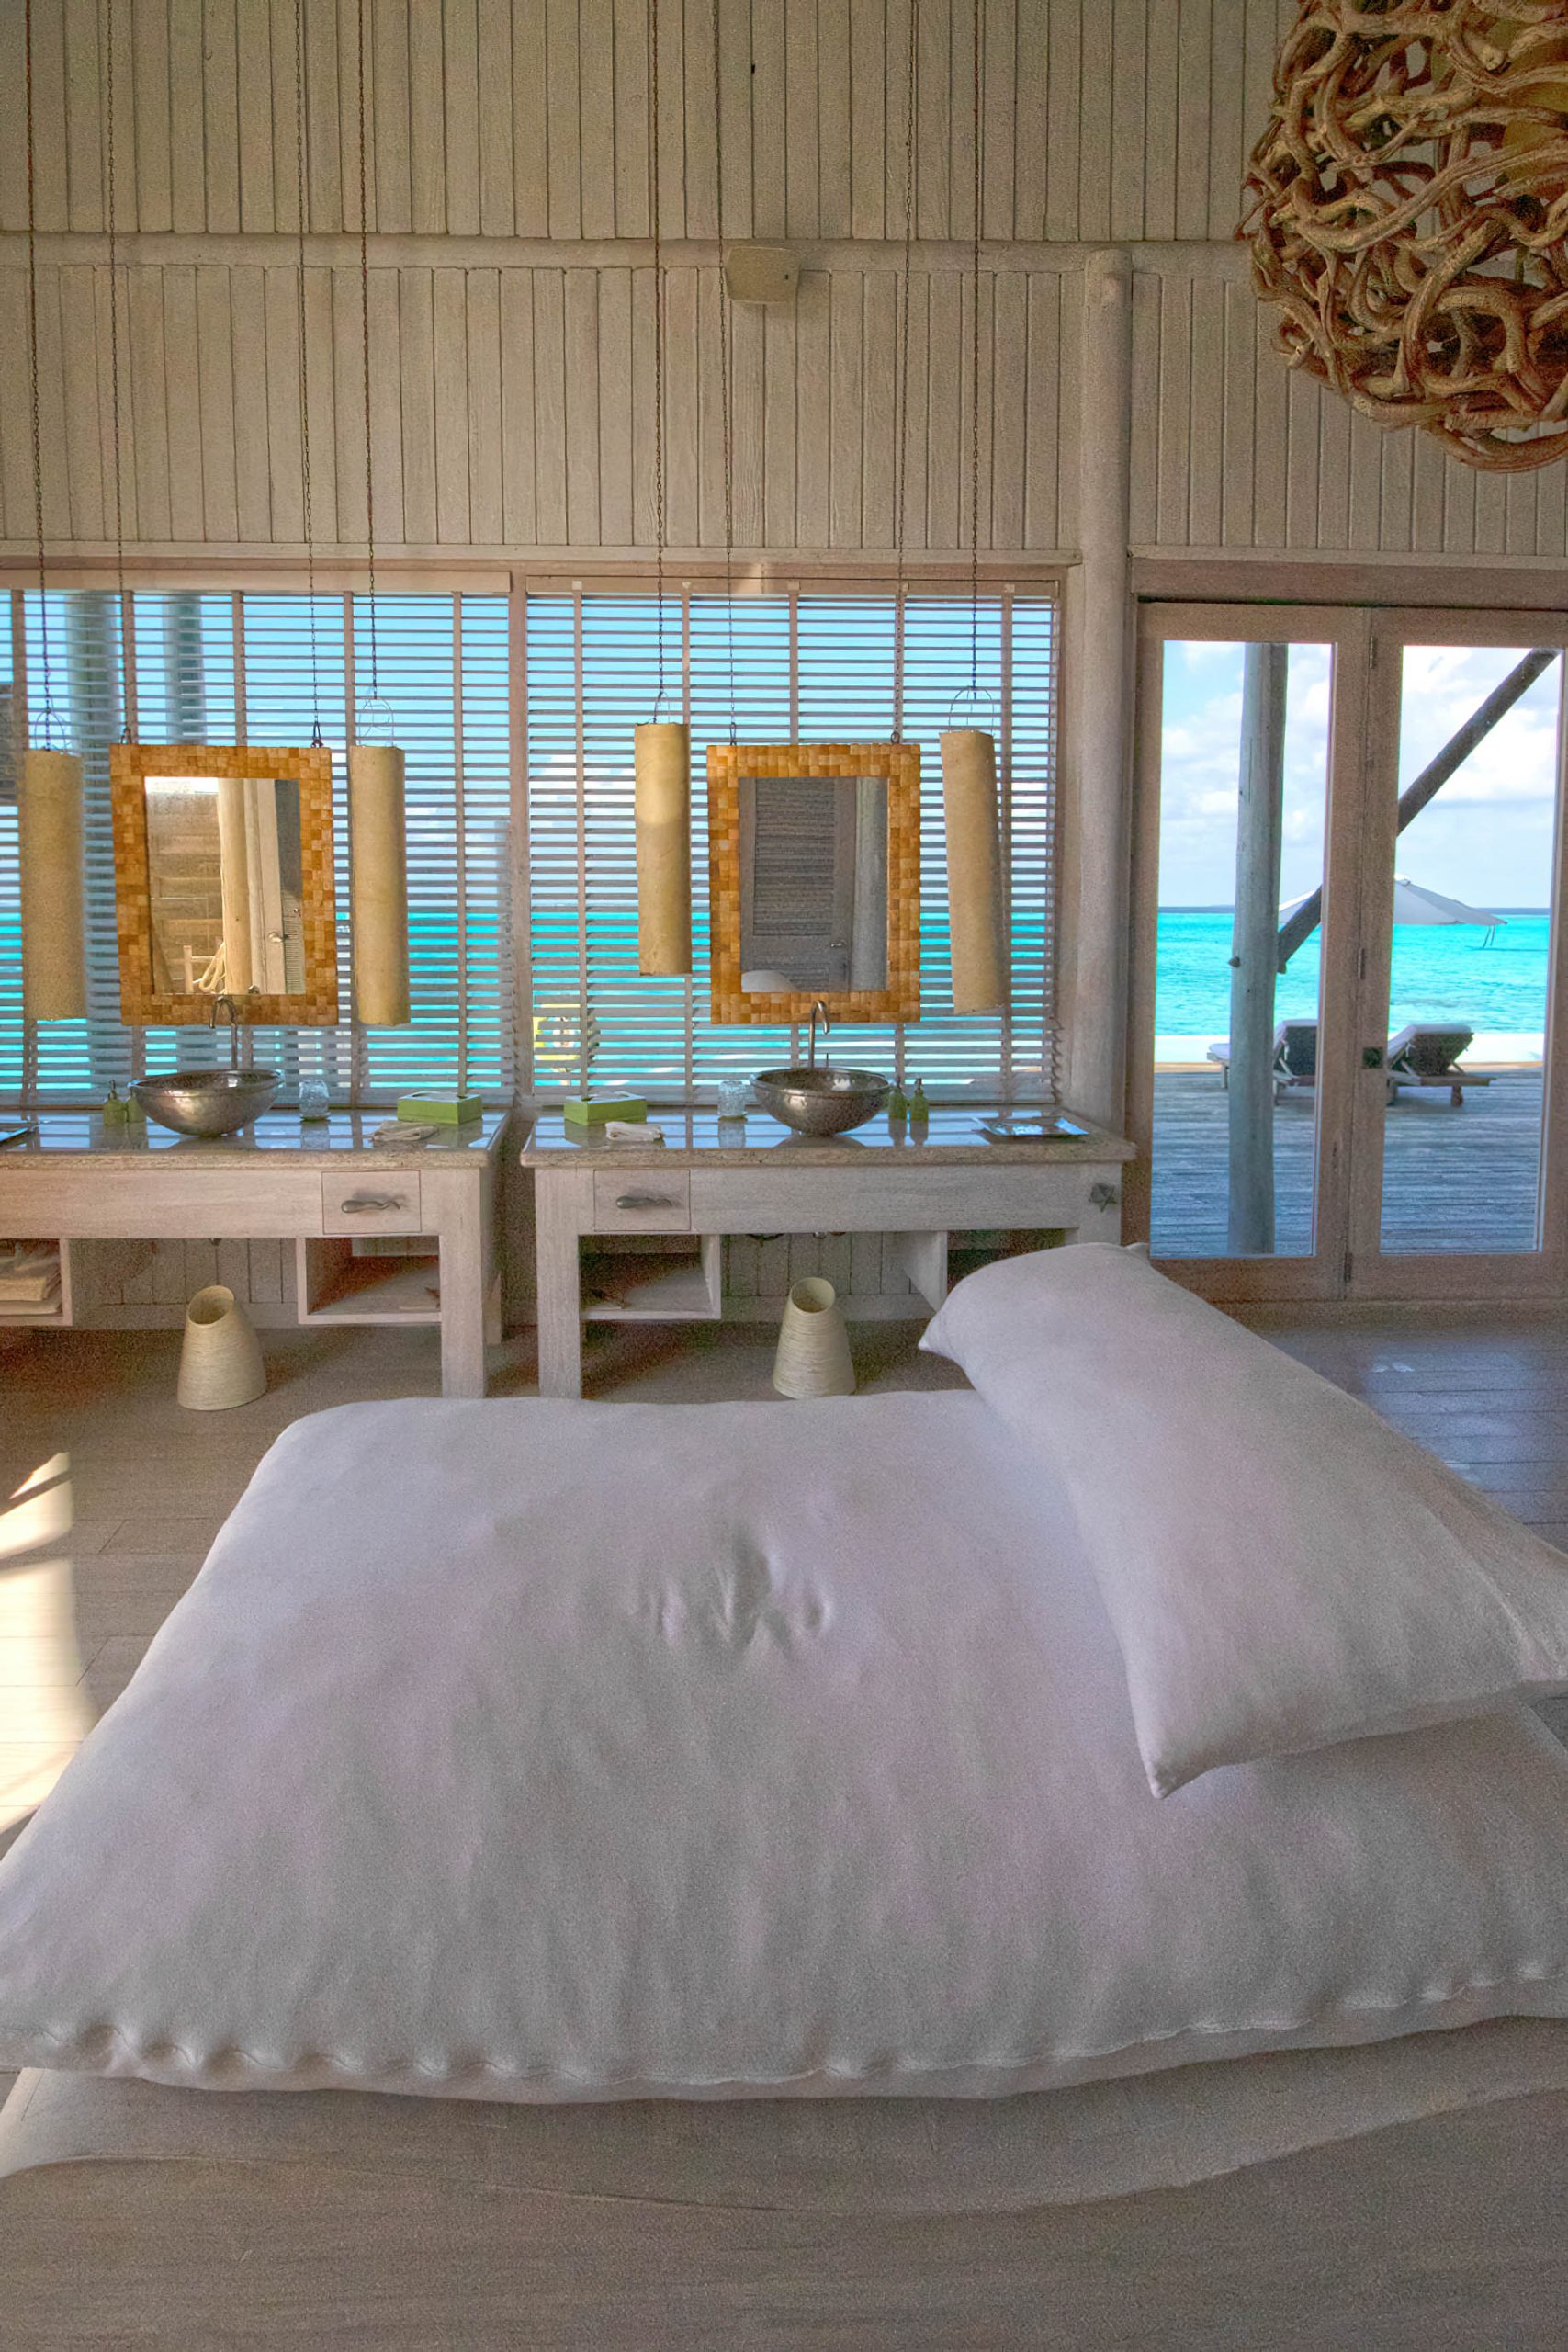 Soneva Jani Resort – Noonu Atoll, Medhufaru, Maldives – 4 Bedroom Water Reserve Villa Bathroom